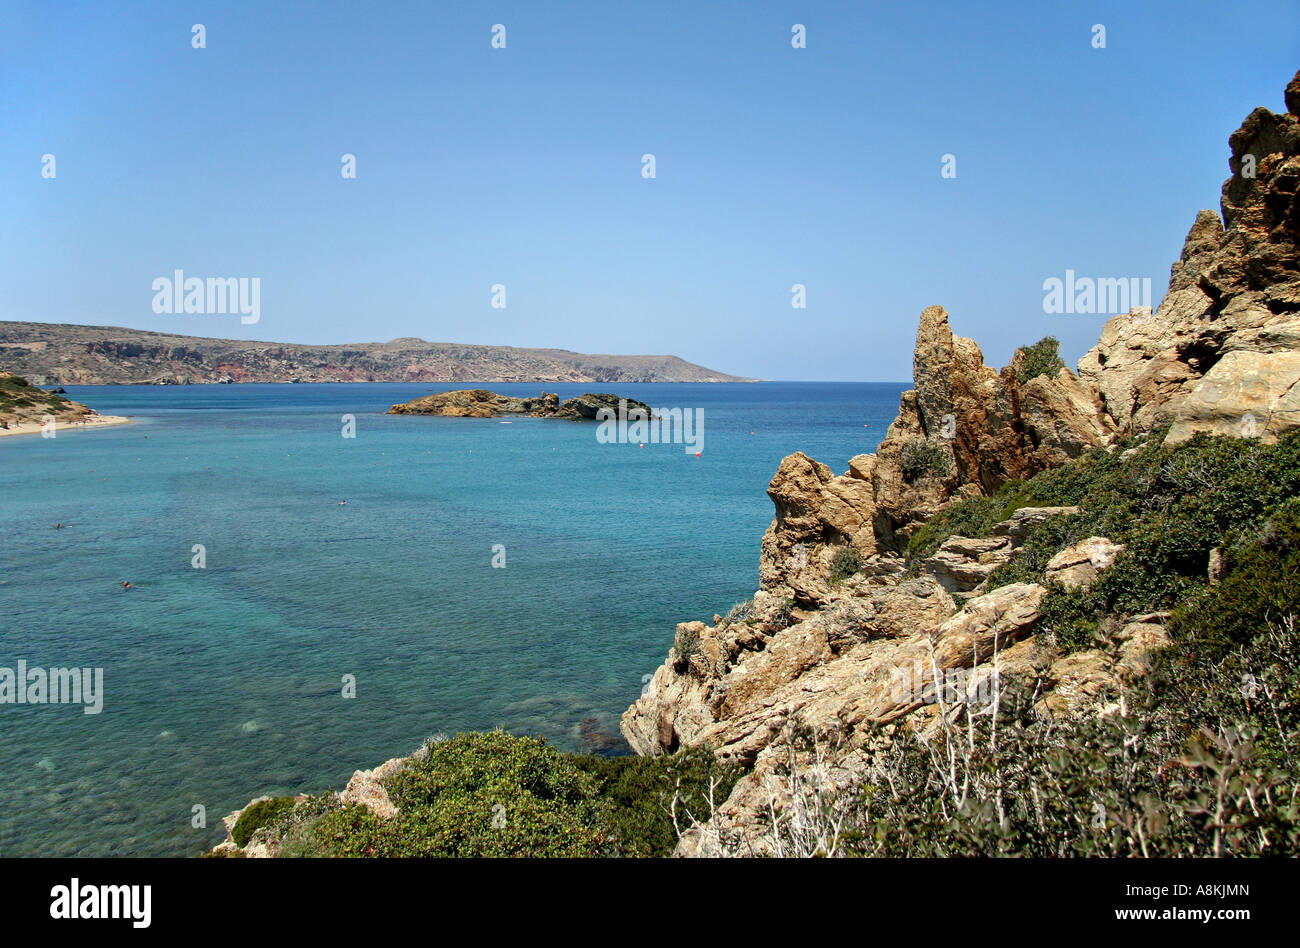 Exotische Palm Beach, Palm, Naturschutzgebiet, Vai, Kreta, Griechenland Stockfoto